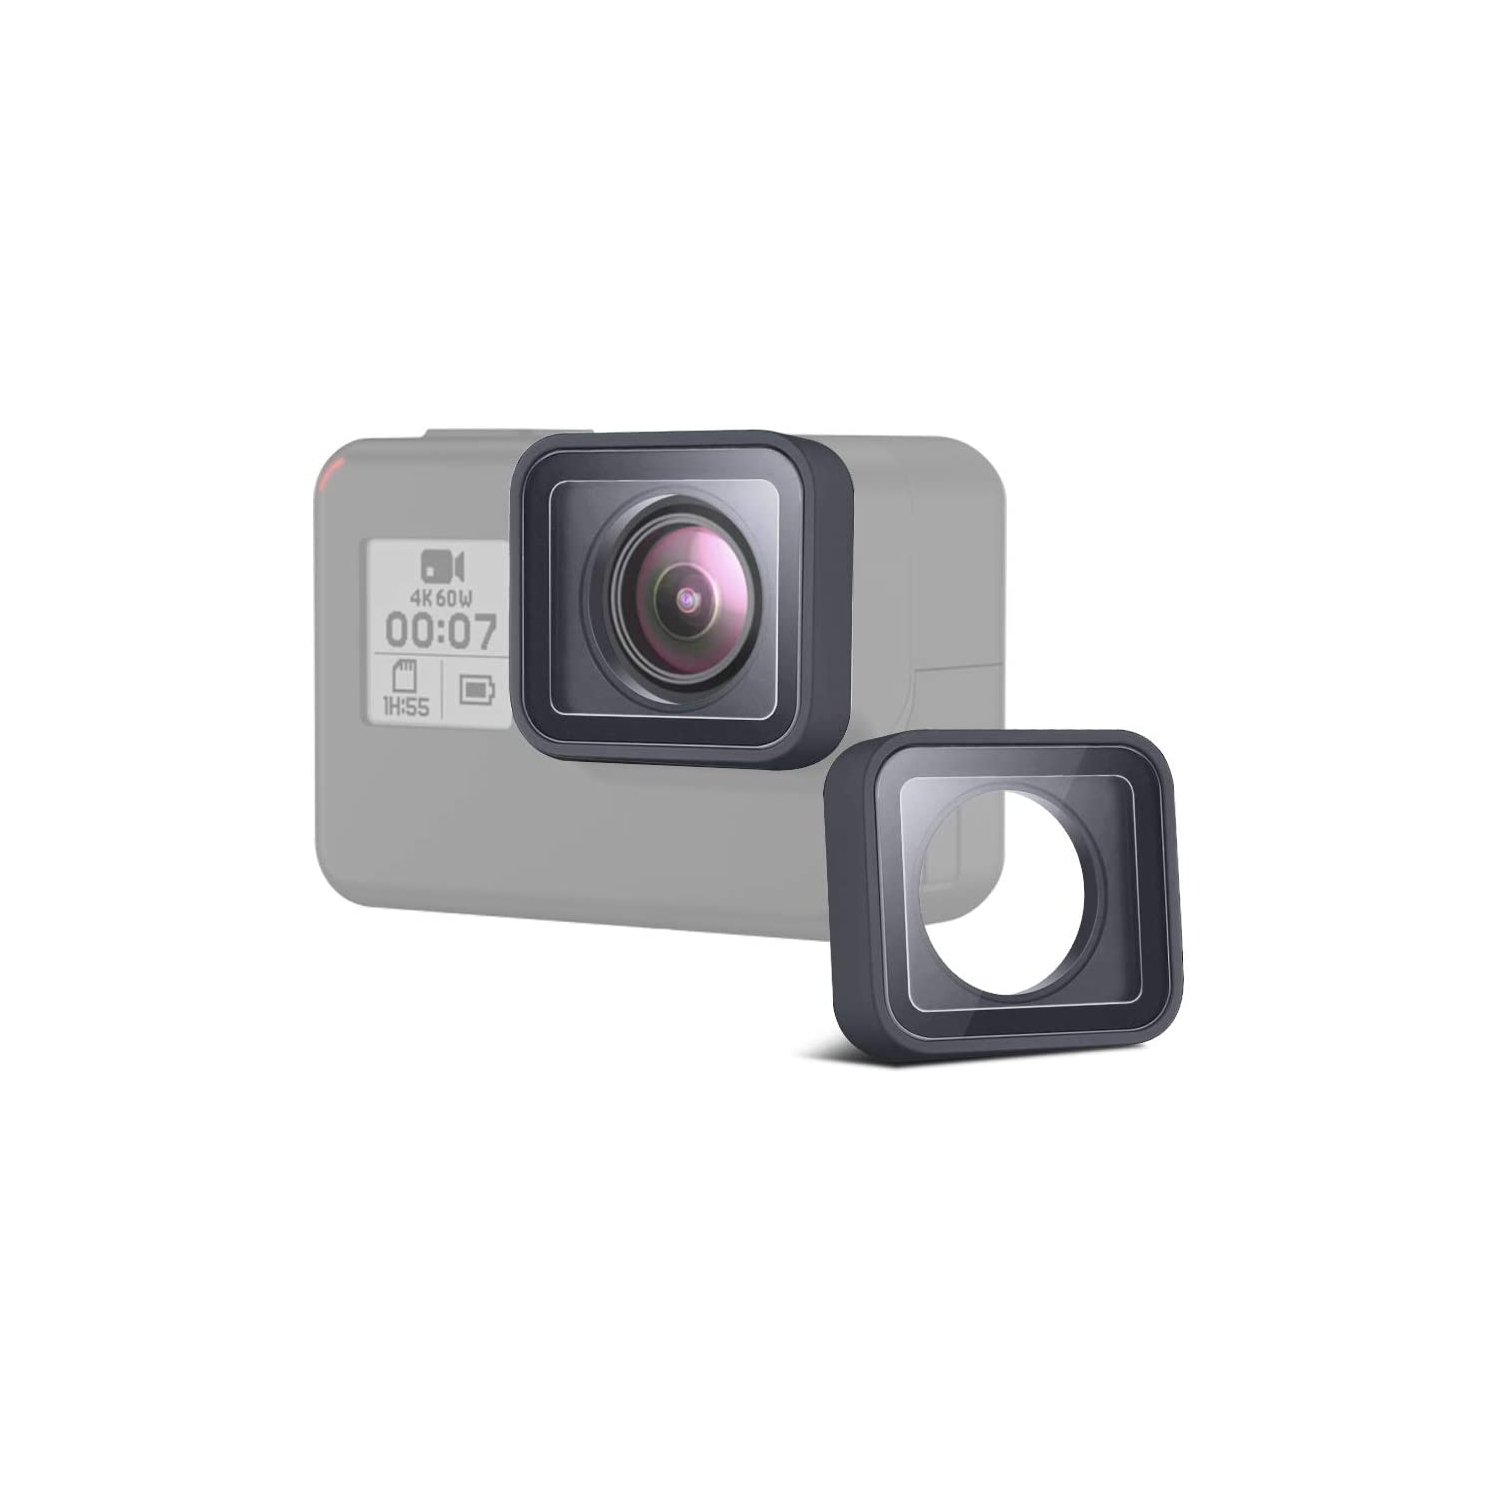 [2 Pack] Protective Lens Replacement for GoPro Hero 6,Hero 5 Lens Cover Camera Glass Protector Lens Cap Spare Repair Part